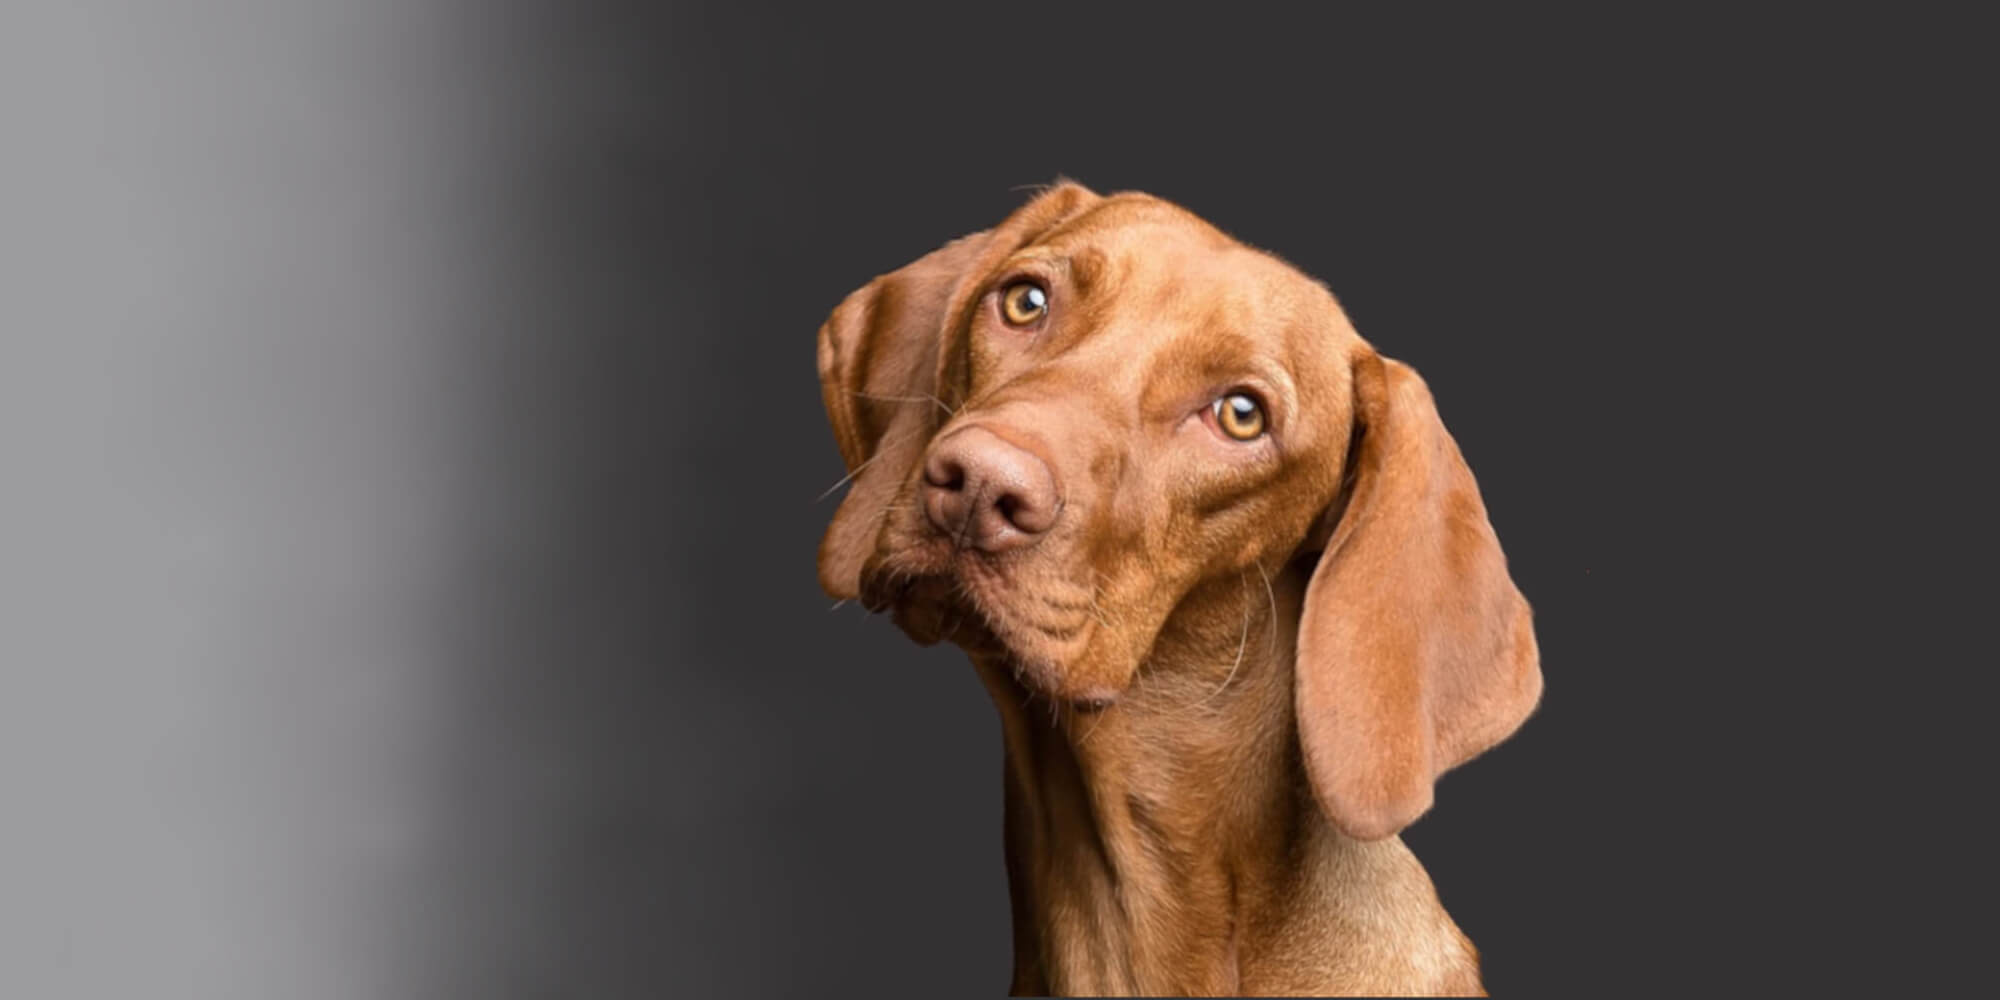 vizsla-dog-image-with-text-highest-quality-single-ingredient-dog-treats-and-chews